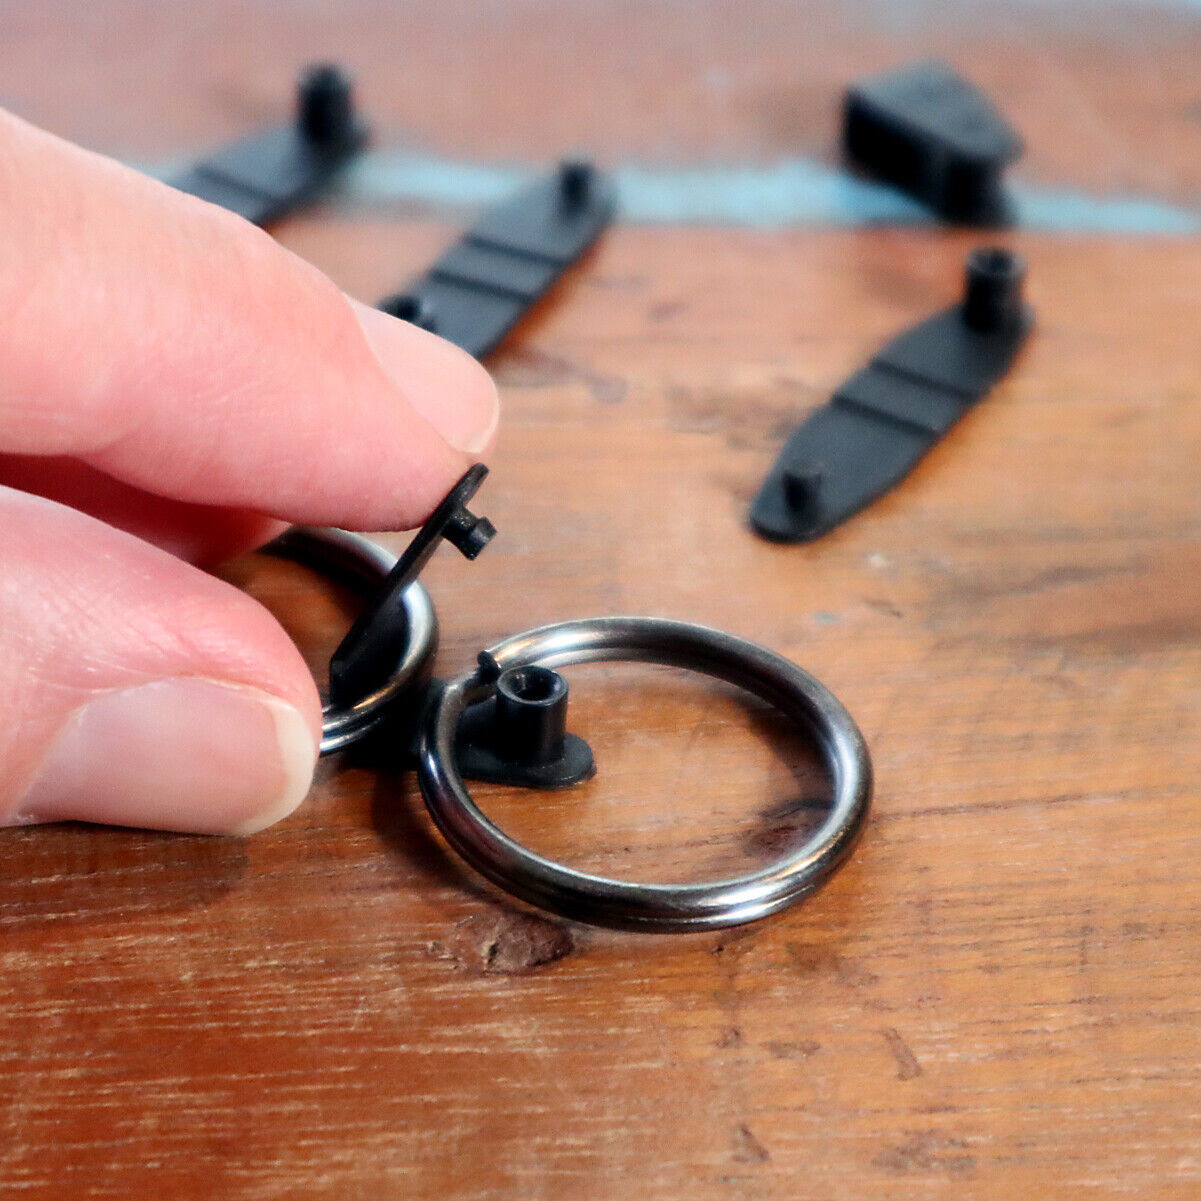 5 pcs - Black Plastic Key Ring Connectors - ID Badge Holder or Charm Adapter Tab Specialist ID 7743-1060 - фотография #4